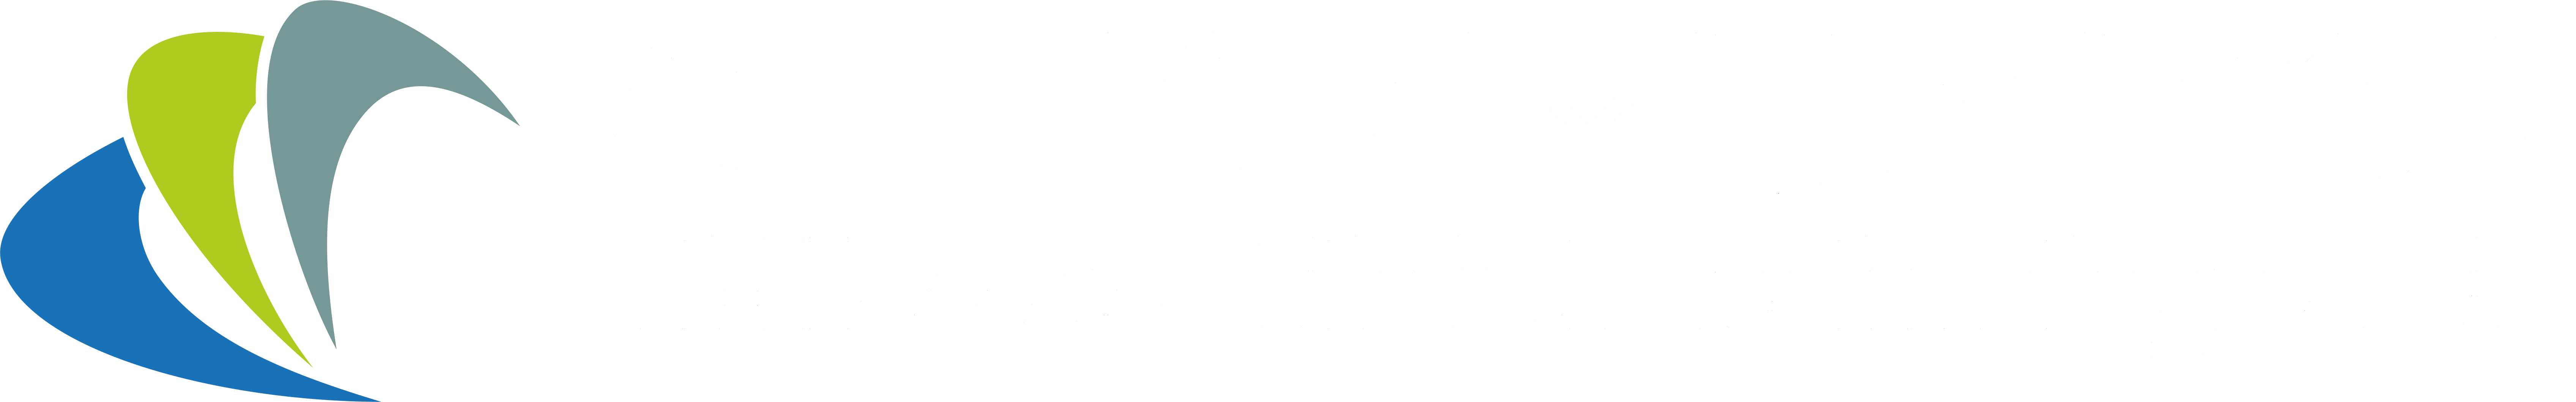 Al-Hazzazi Global Technologies